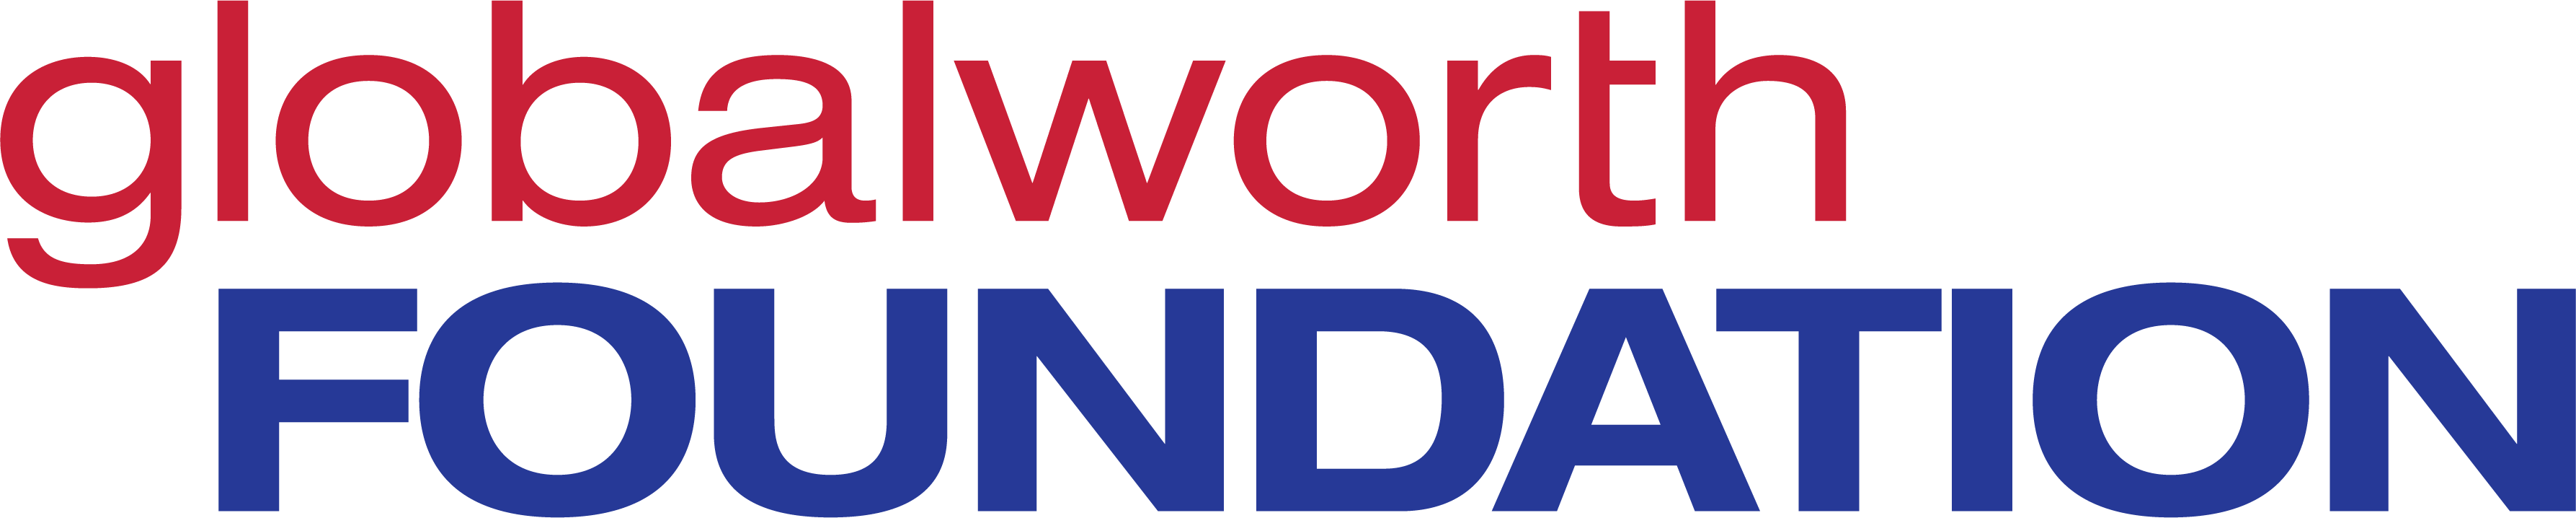 Fundatia Globalworth logo